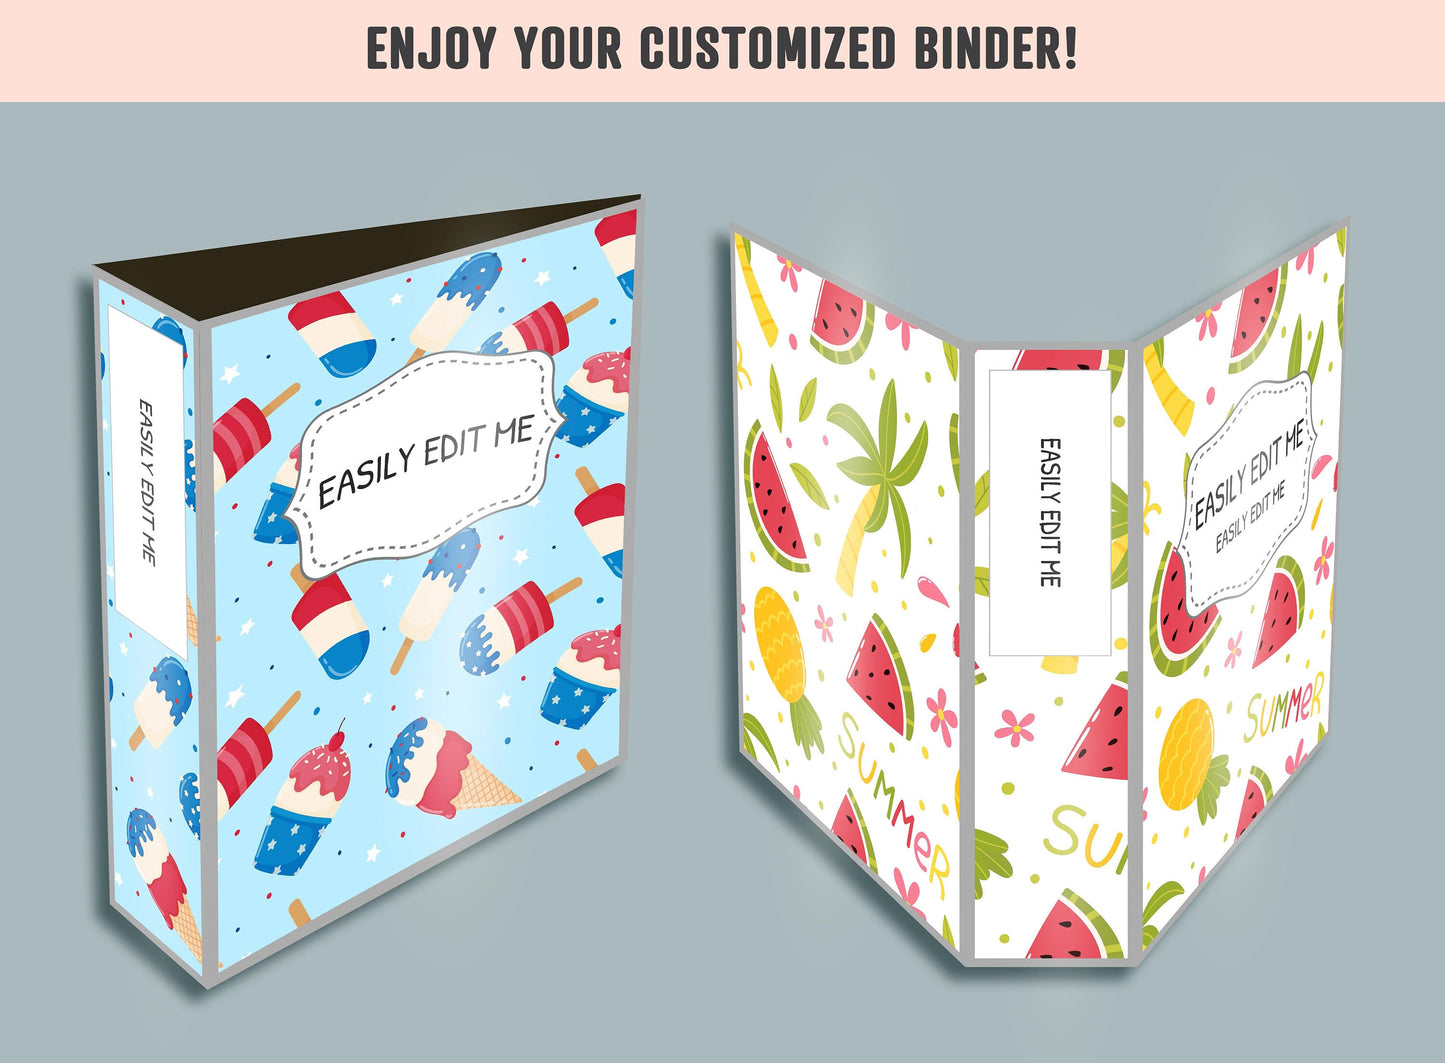 Summer Pattern Binder Cover, 10 Printable/Editable Binder Covers + Spines, Watermelon Planner Template Teacher/School Binder Label/Insert